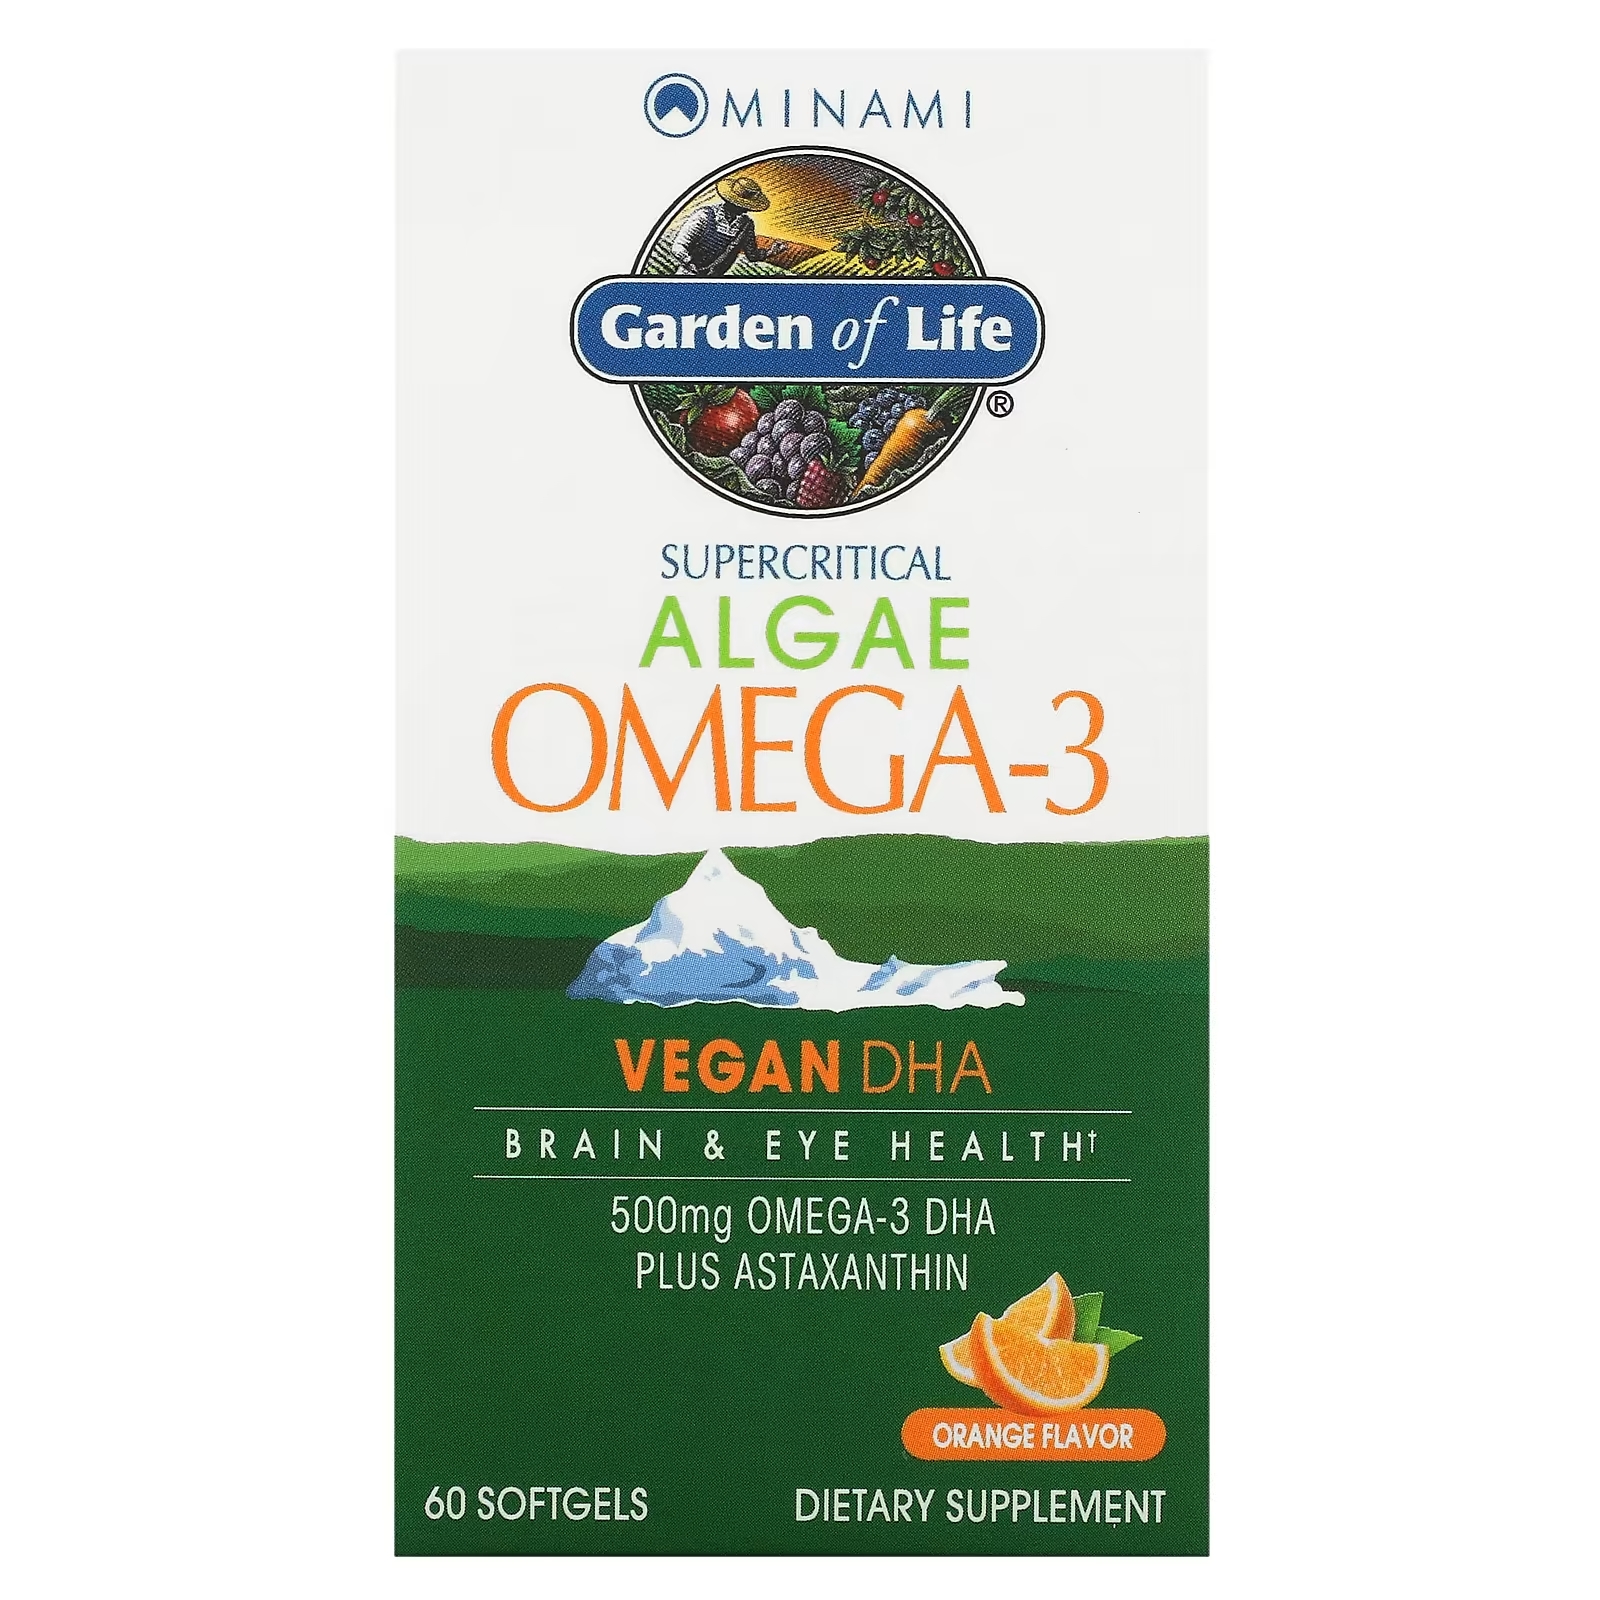 Minami Nutrition Algae Omega-3 апельсиновый вкус, 60 мягких таблеток minami nutrition algae omega 3 апельсиновый вкус 60 мягких таблеток